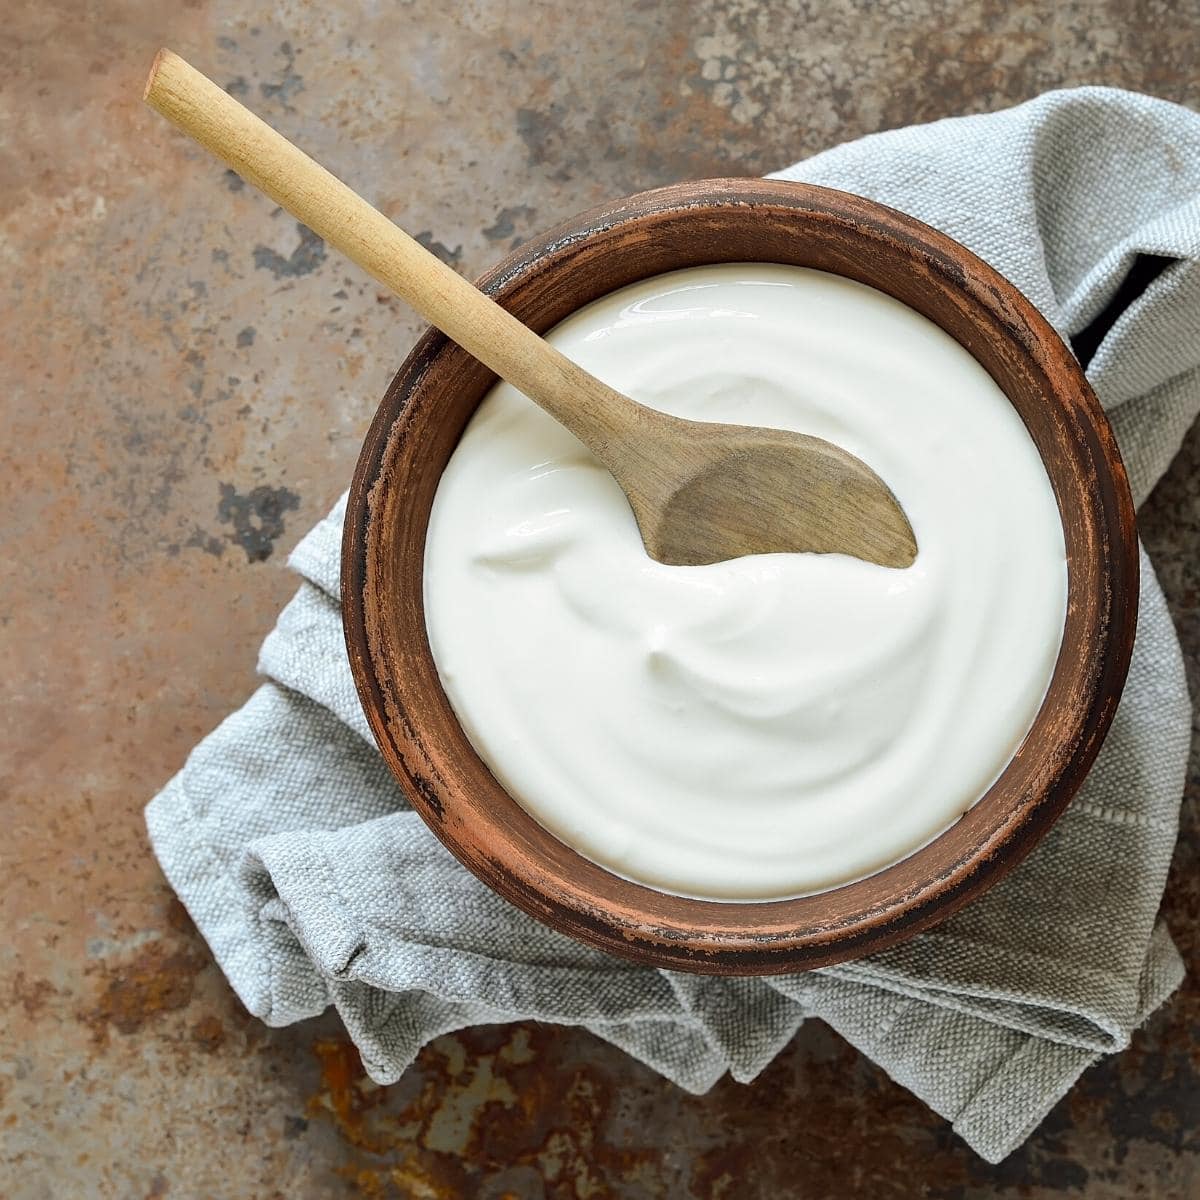 yogurt as a milk alternative in mac and cheese